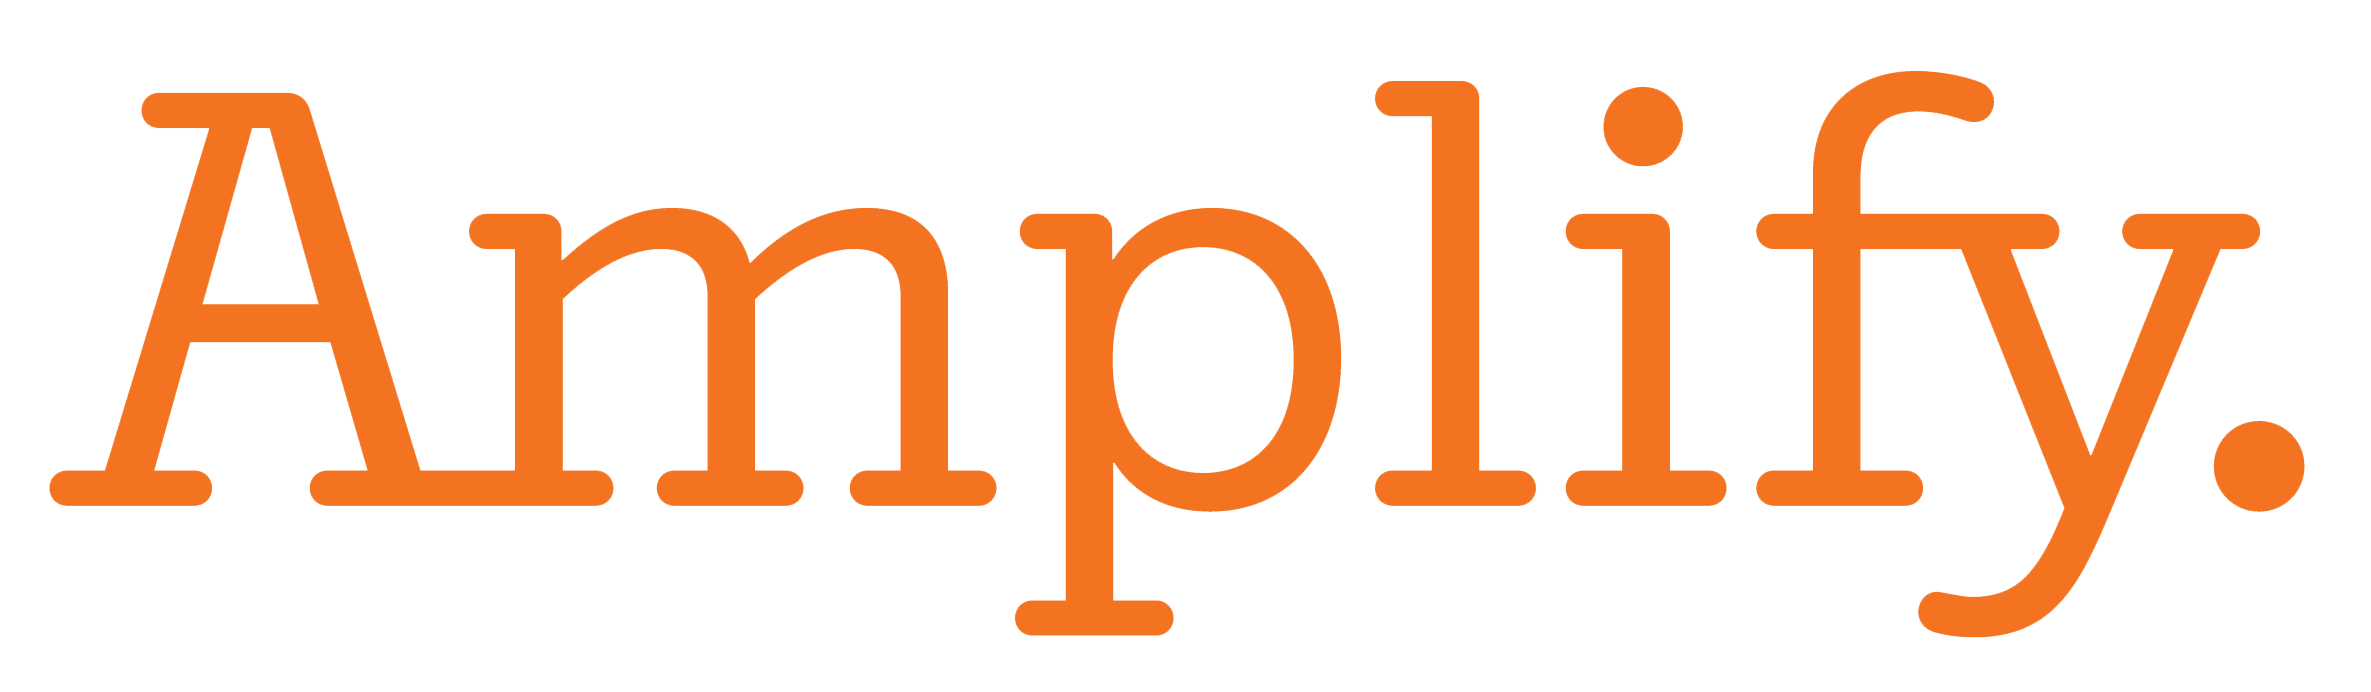 Amplify logo, orange in color